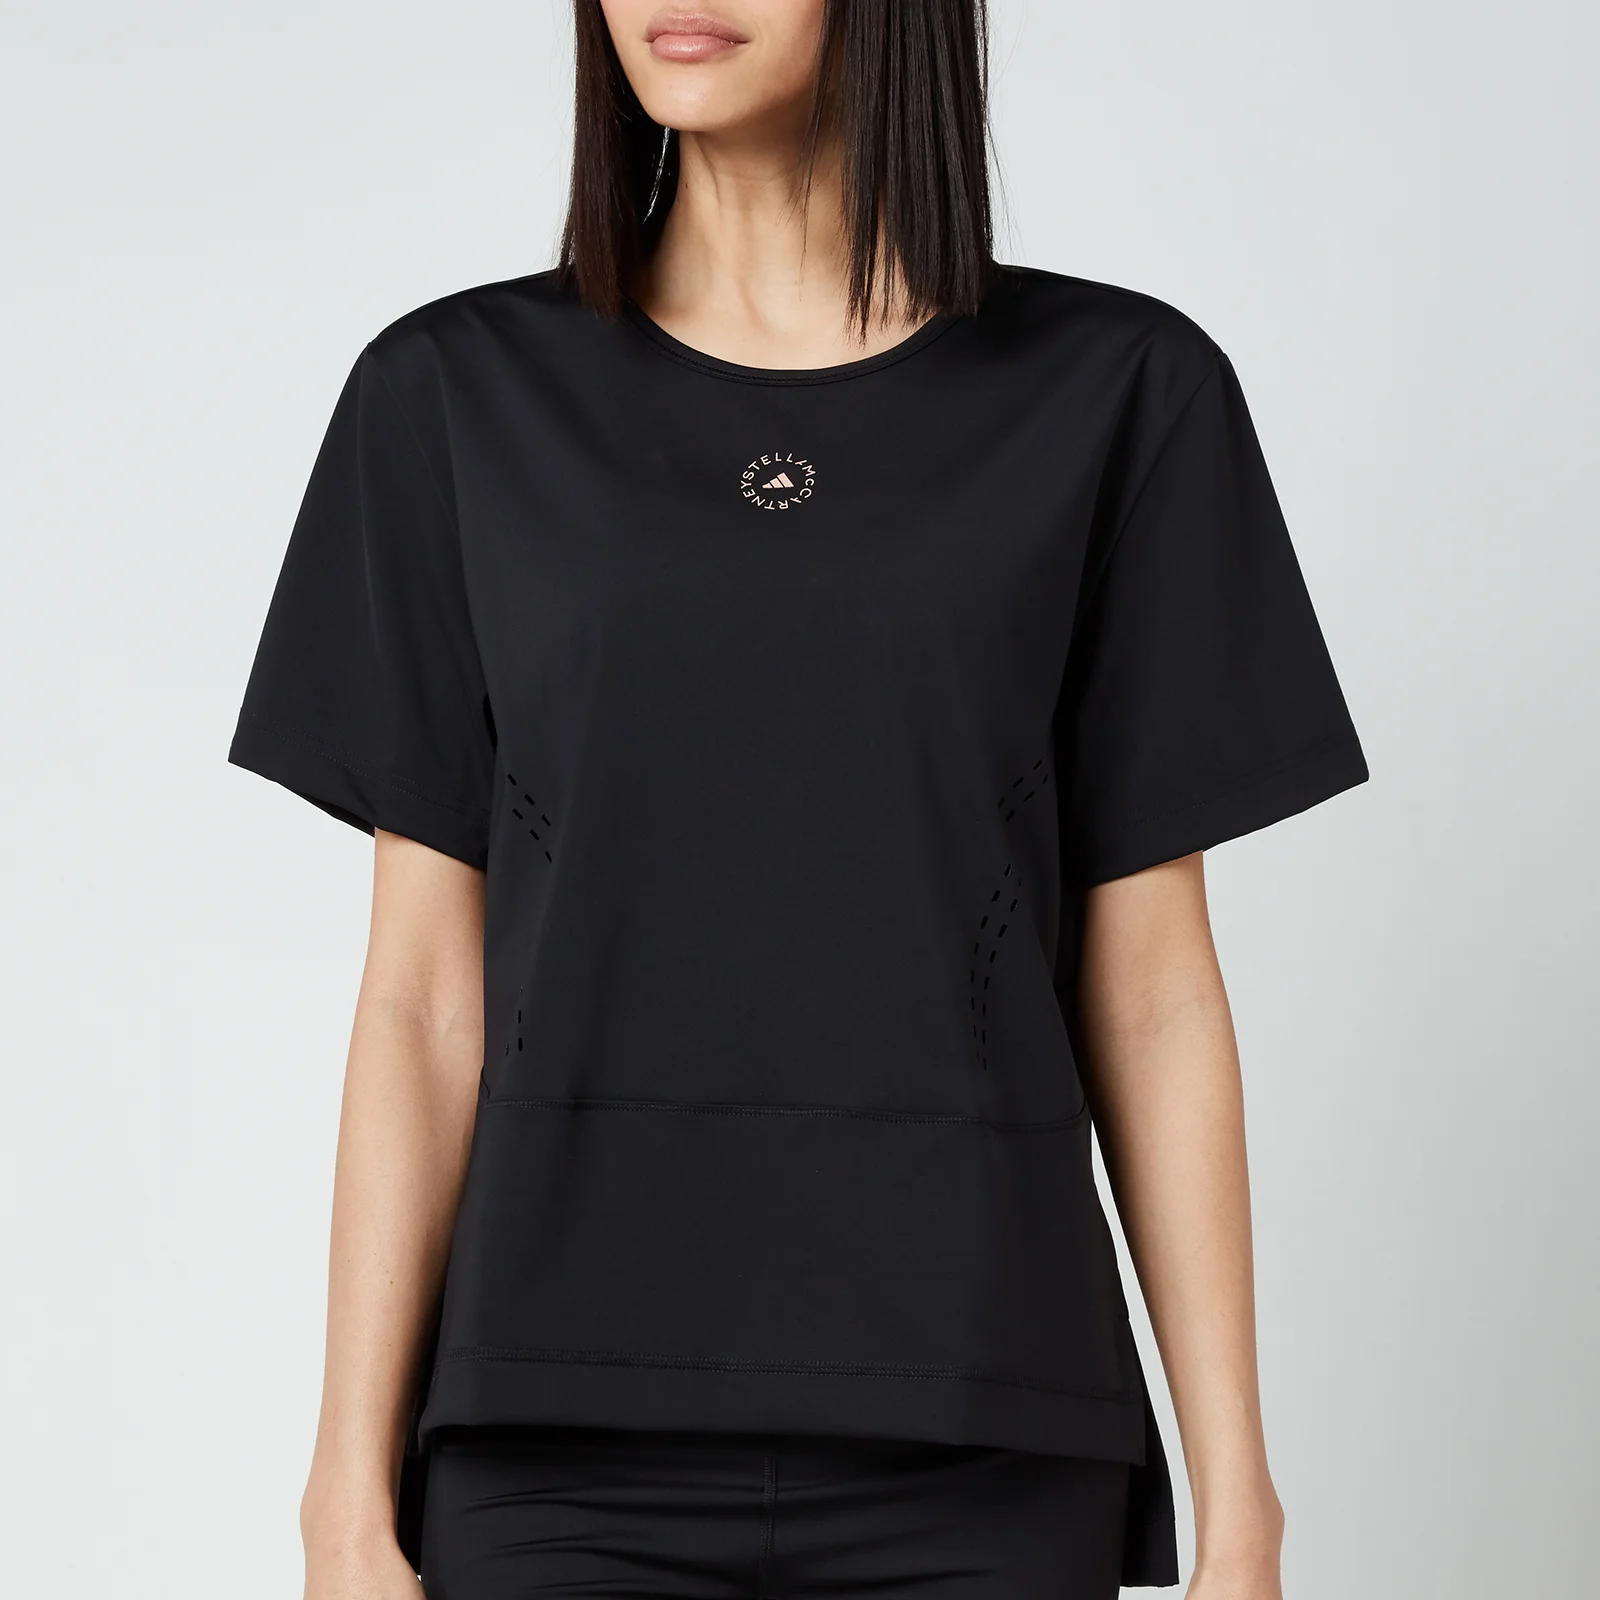 adidas by Stella McCartney Women's Truestrength Loose T-Shirt - Black Image 1